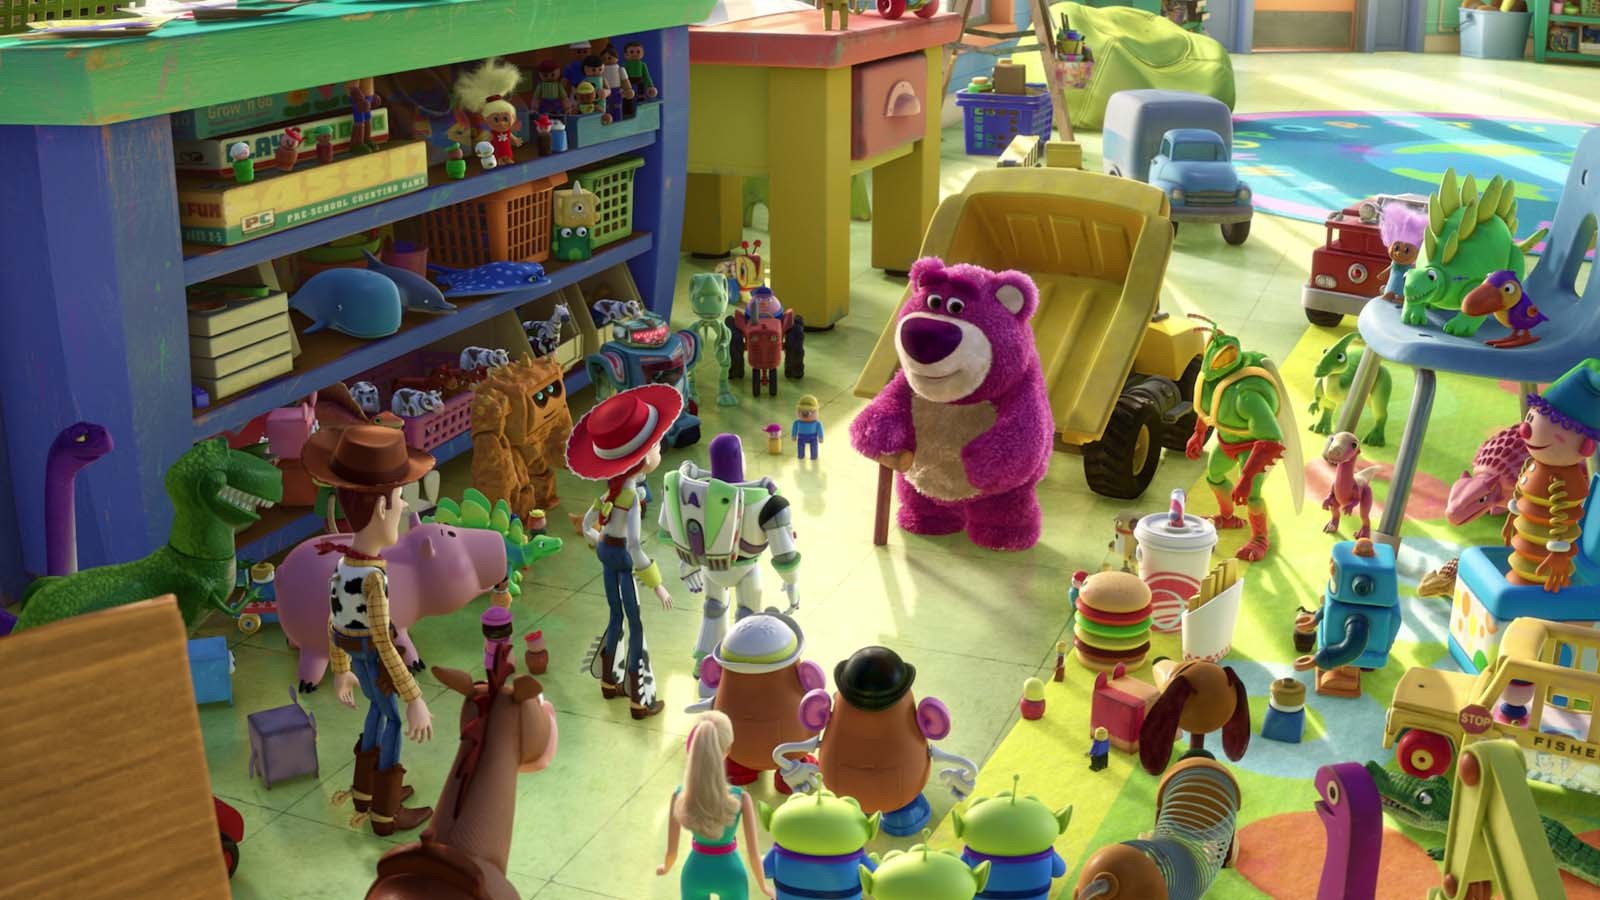 General 1600x900 Toy Story 3 Pixar Animation Studios movies animated movies film stills